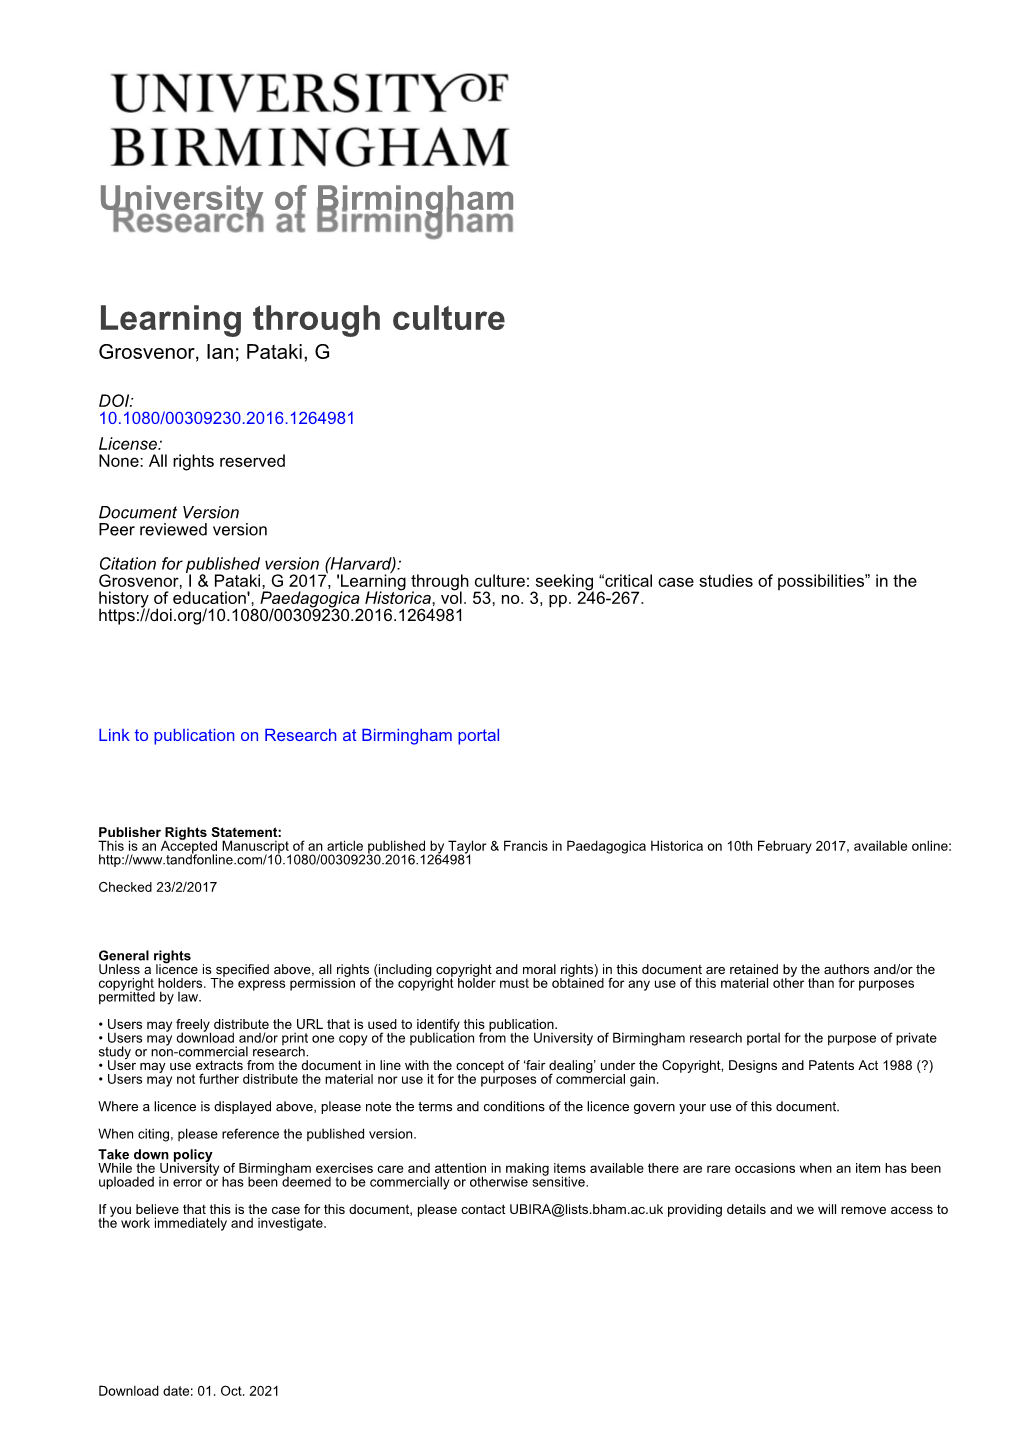 University of Birmingham Learning Through Culture